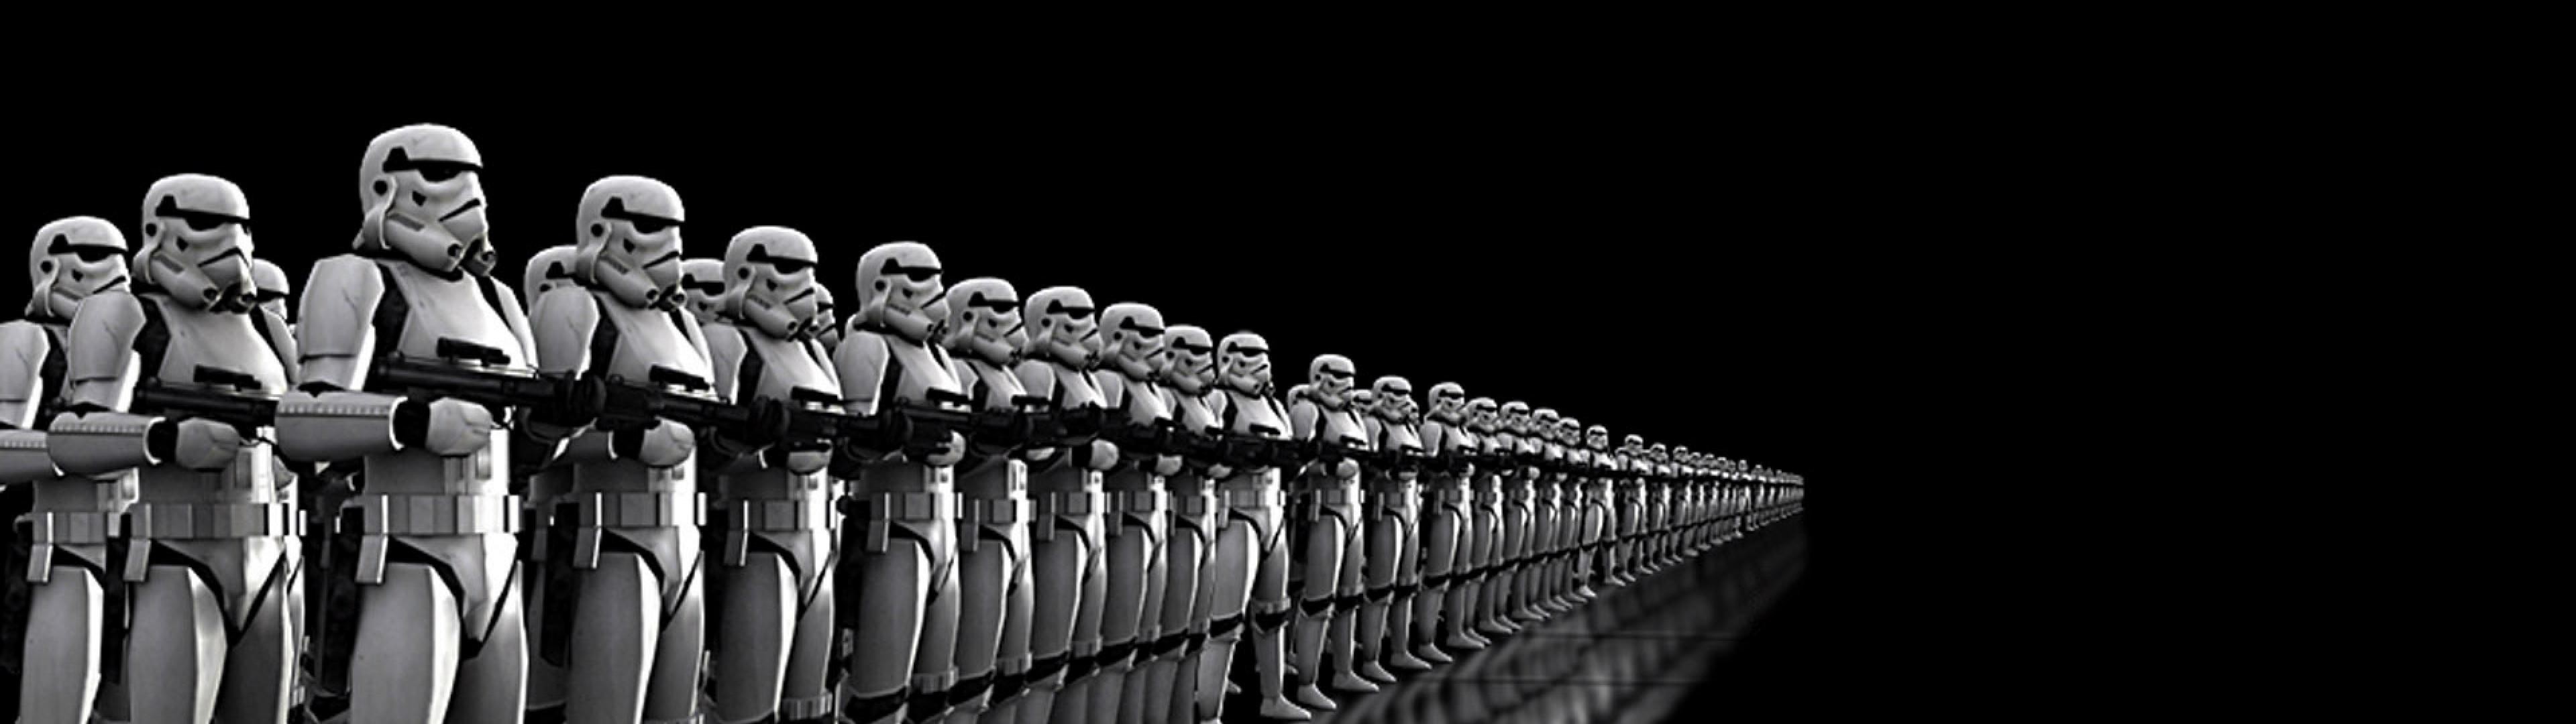 3840x1080 star wars stormtroopers storm troopers HD Wallpaper - Movies & TV .